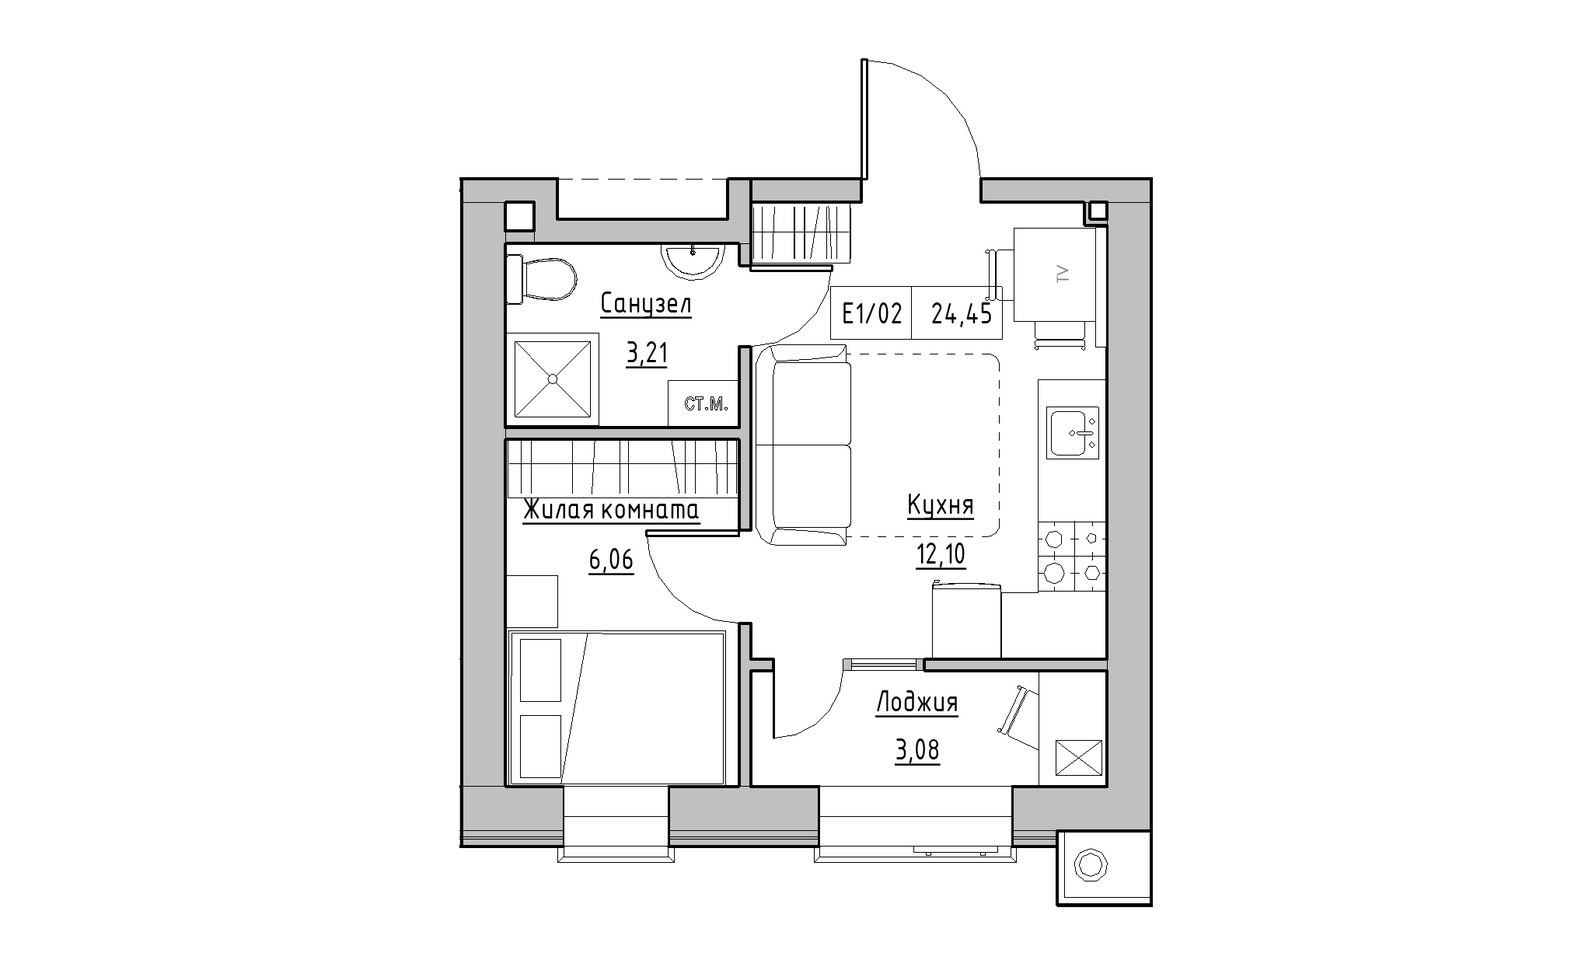 Planning 1-rm flats area 24.45m2, KS-014-01/0002.